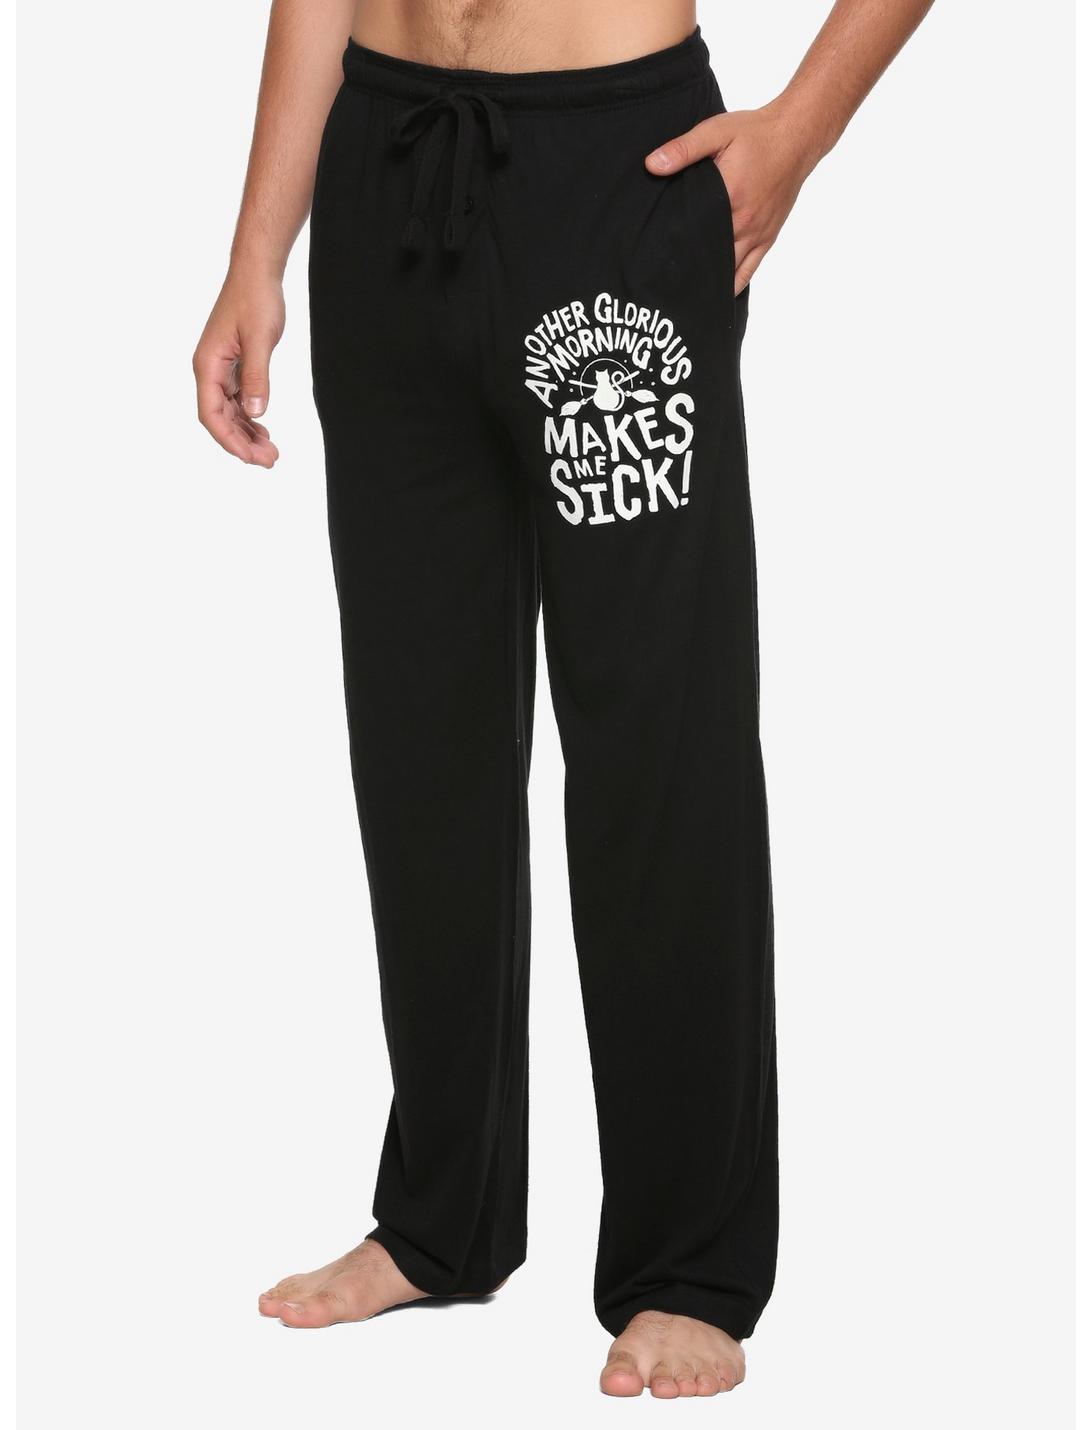 Hocus Pocus Glorious Morning Pajama Pants, WHITE, hi-res